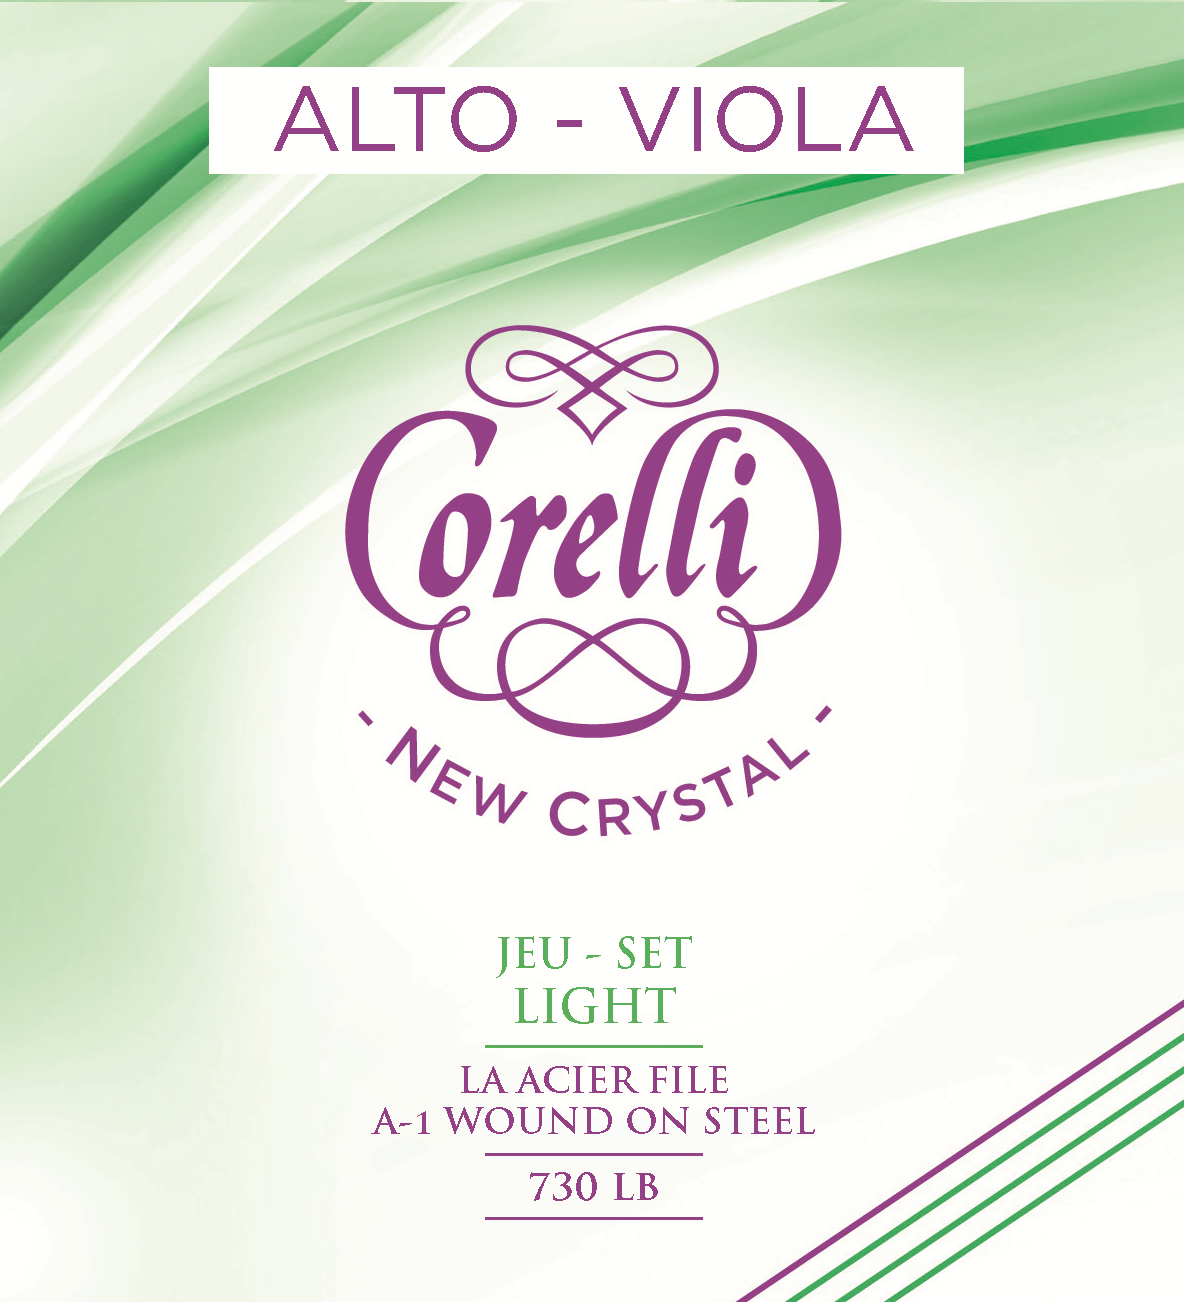 CORELLI NEW CRYSTAL LIGHT 730LB VIOLA